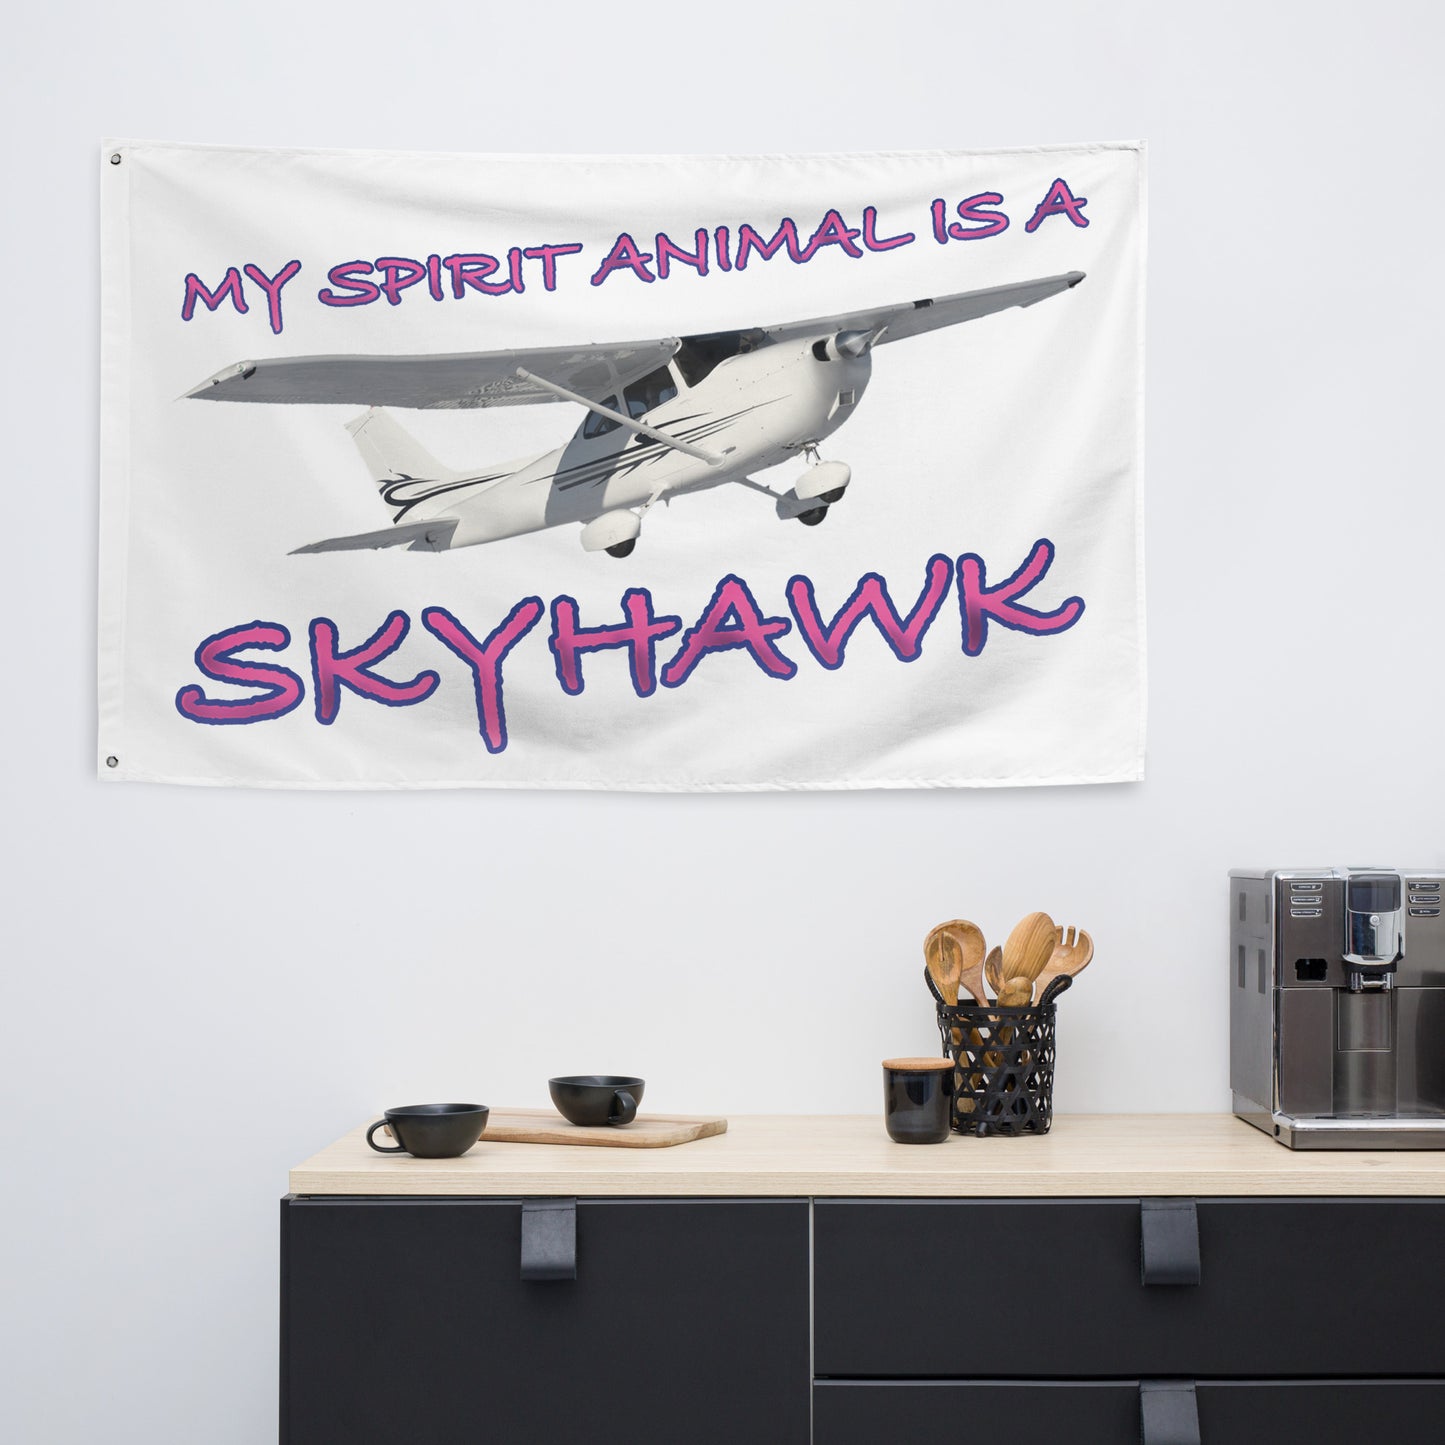 My Spirit Animal is a Skyhawk - flag (pink)